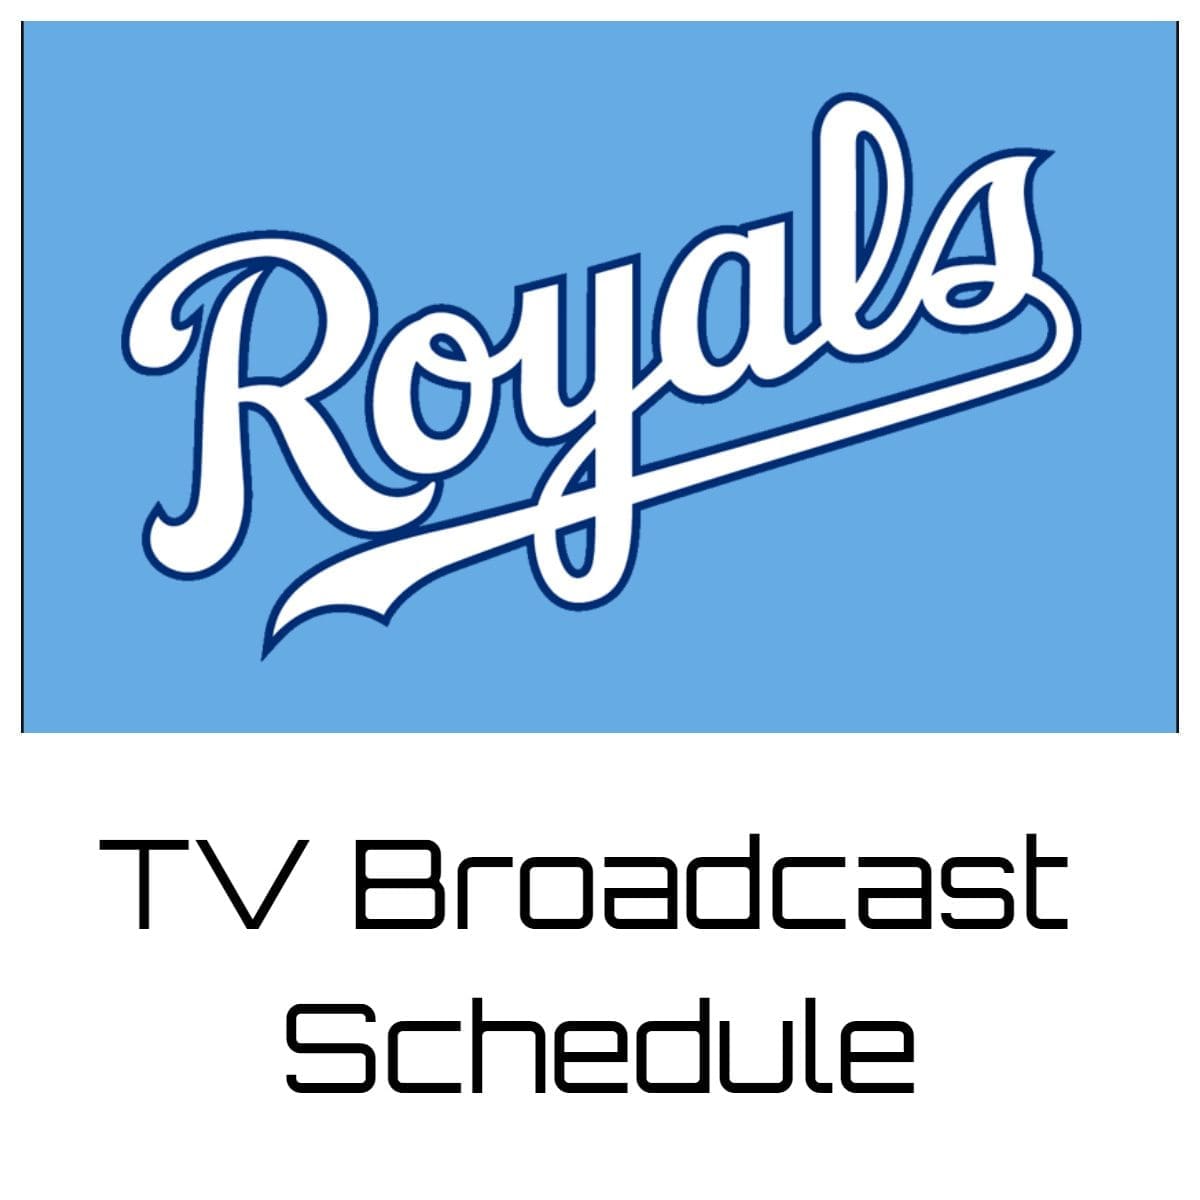 Kansas City Royals TV Broadcast Schedule